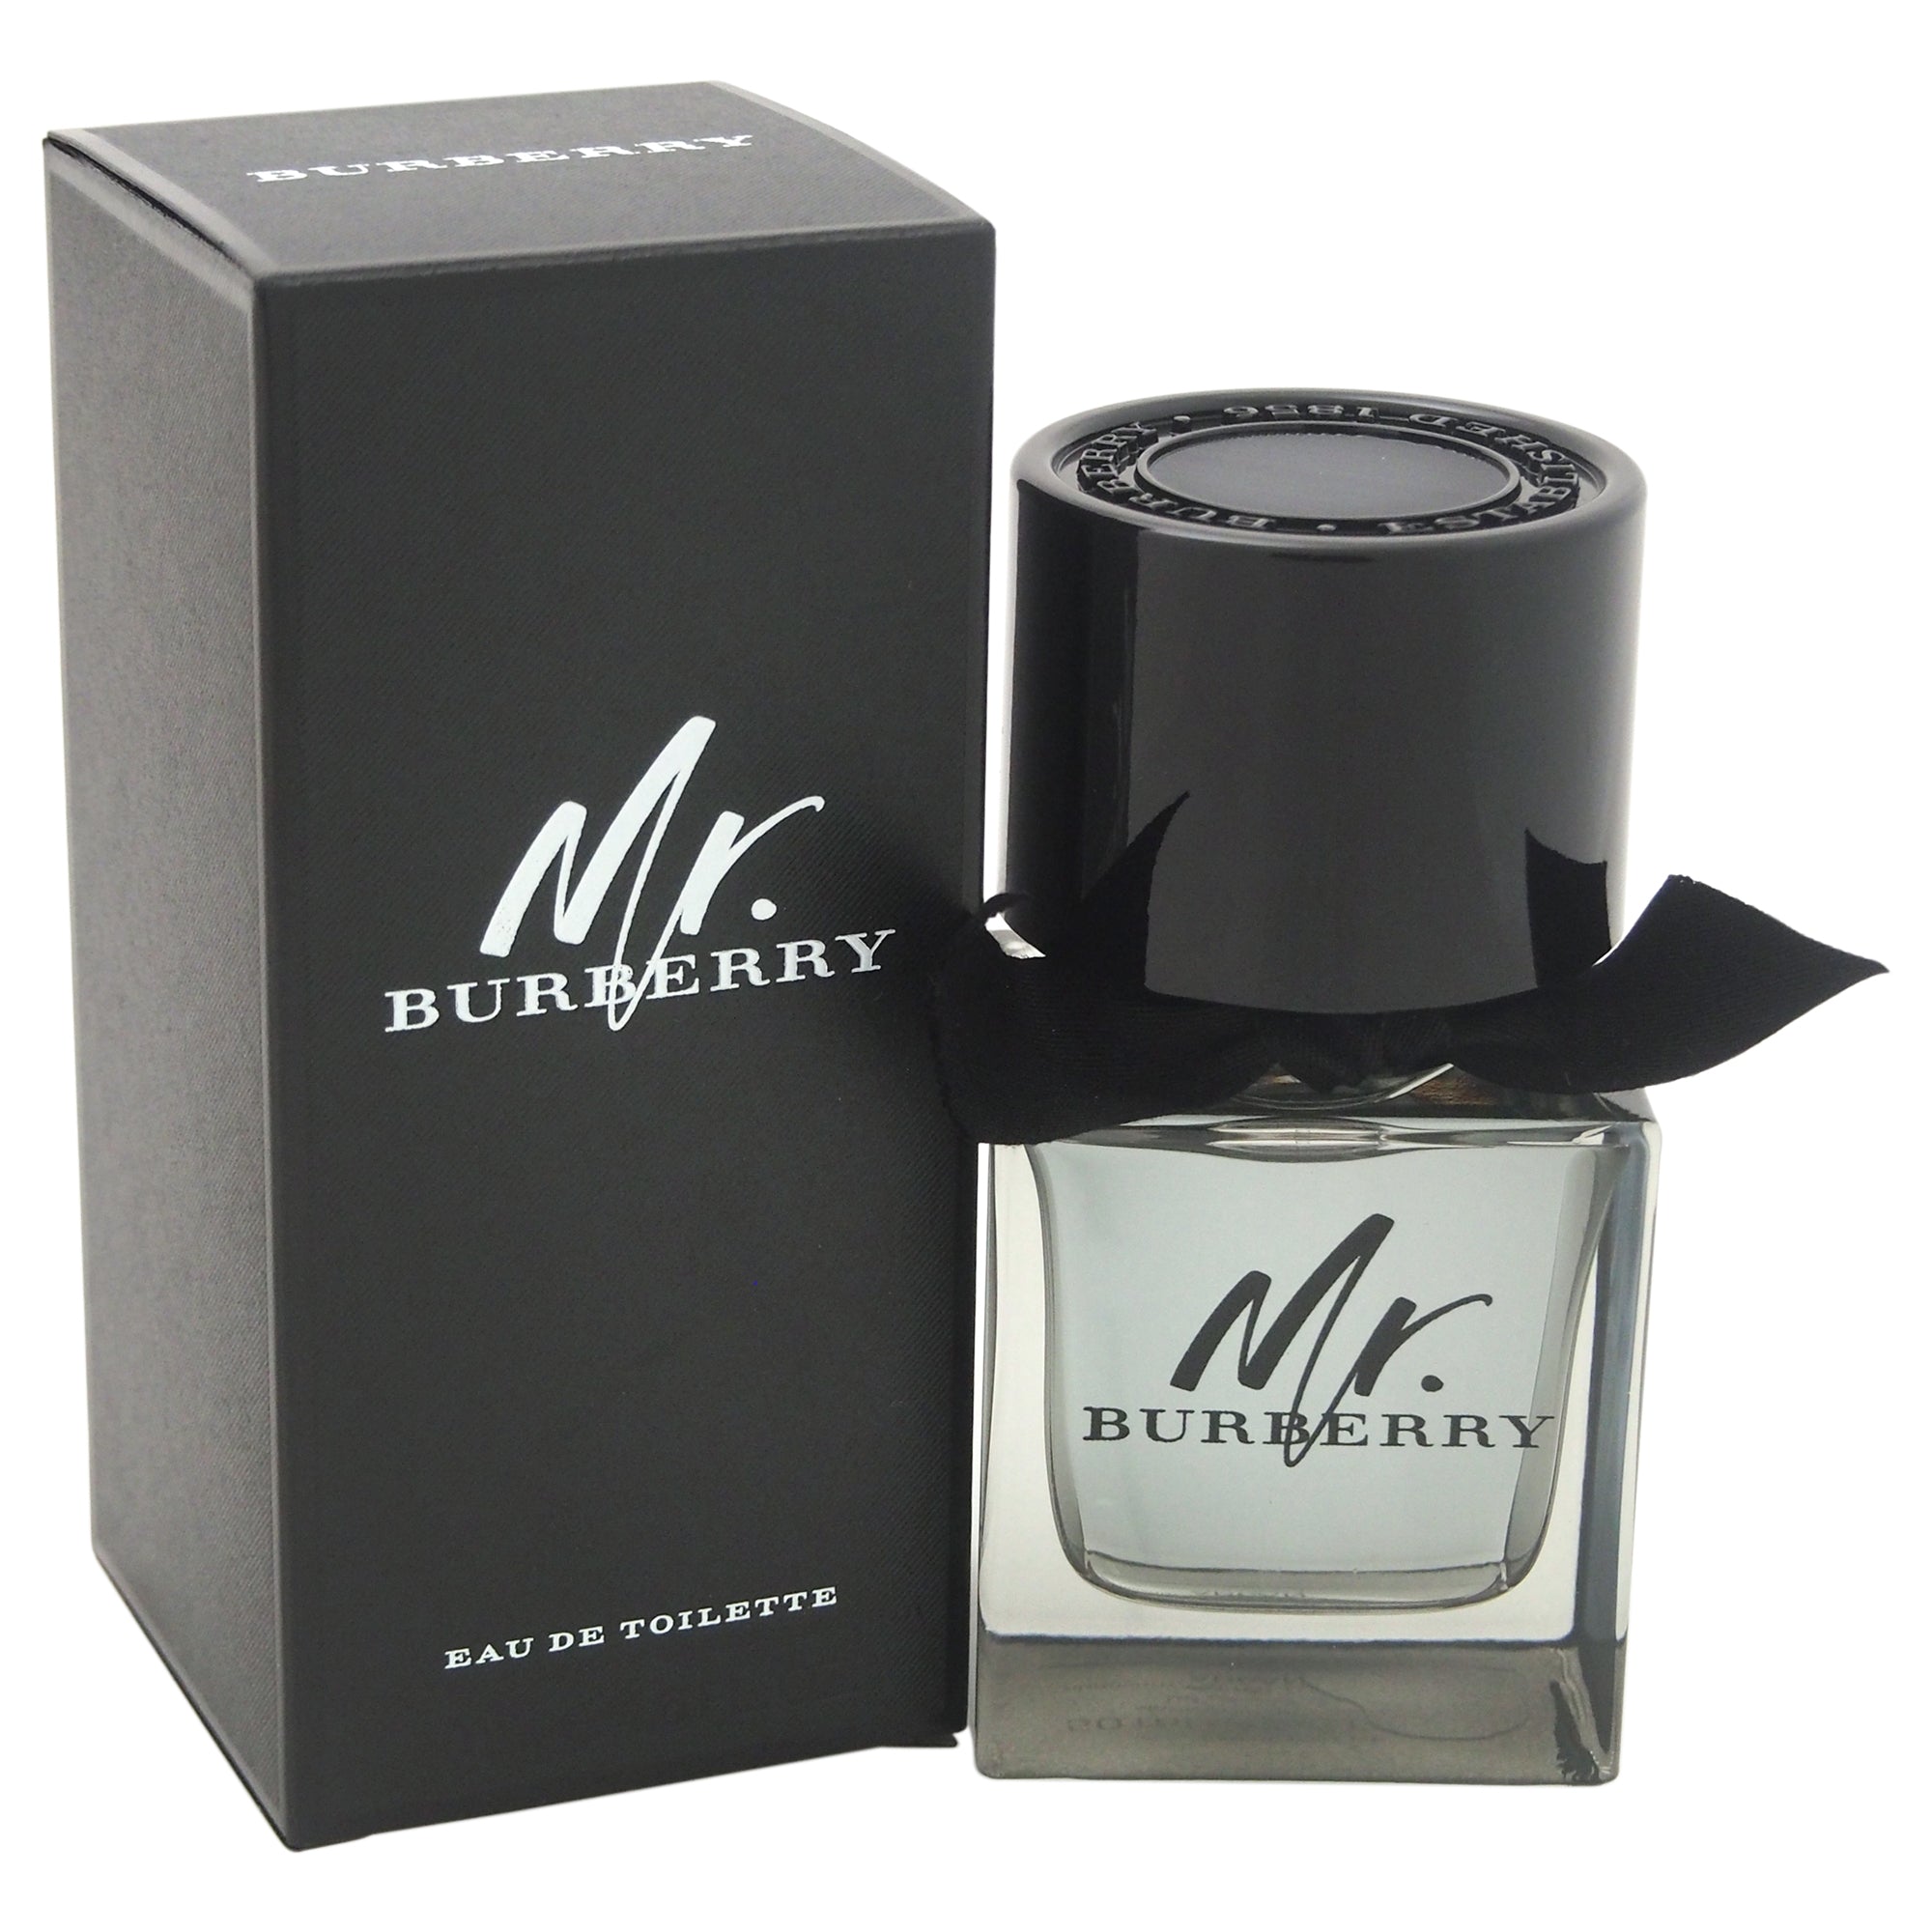 Mr. Burberry by Burberry for Men 1.6 oz EDT Spray